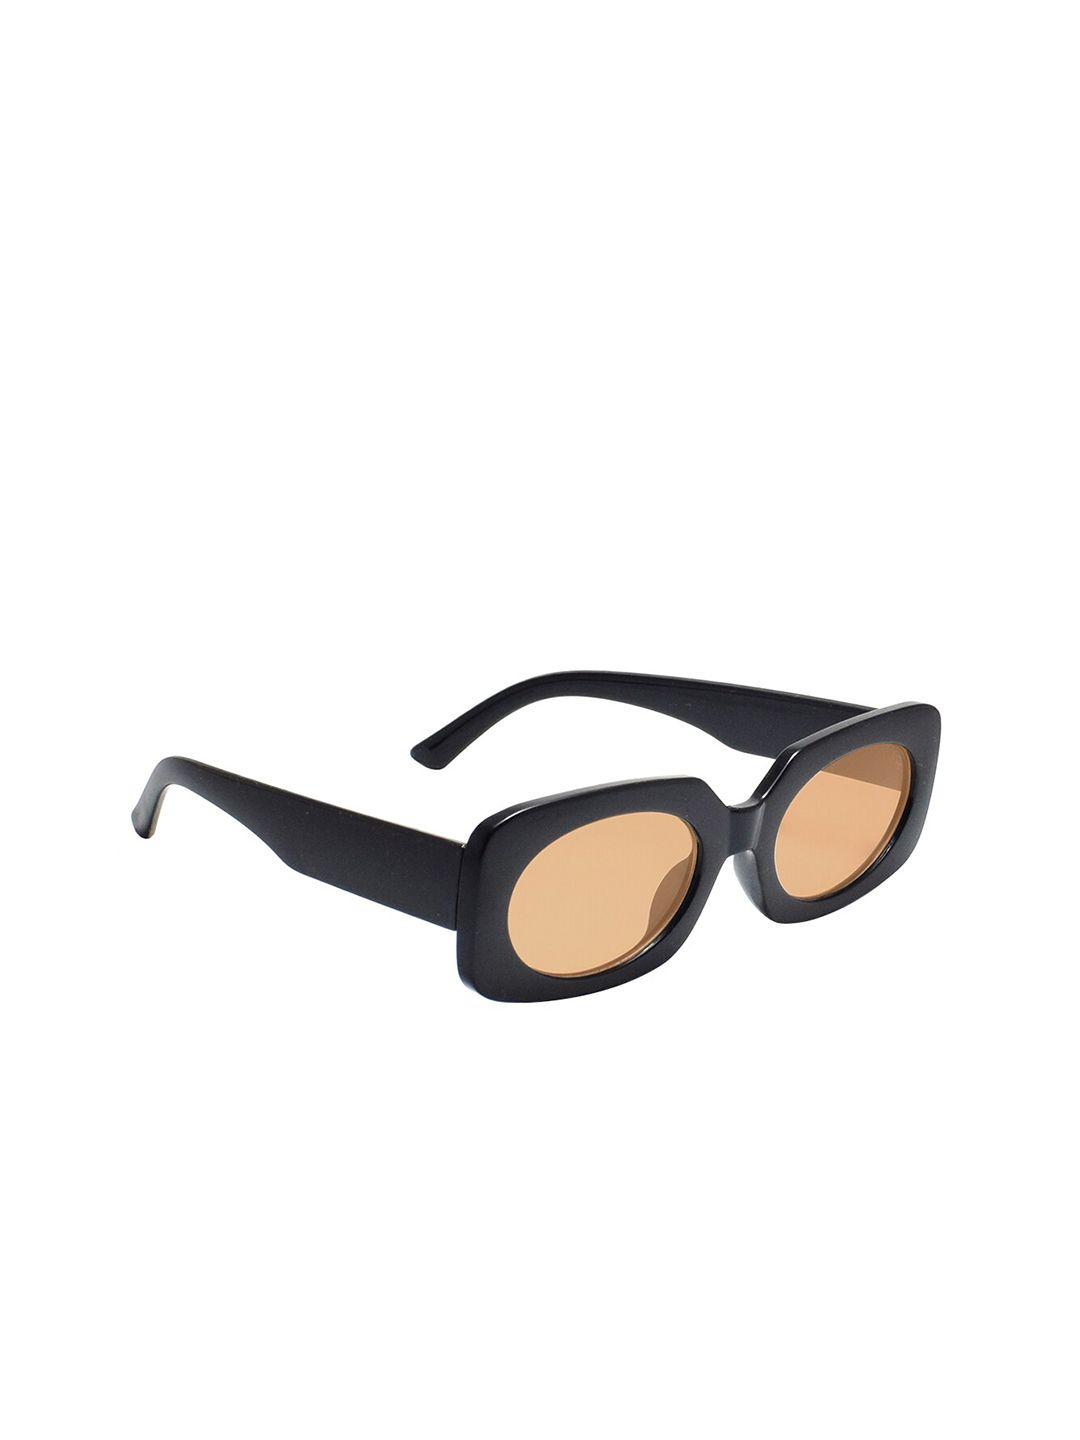 peter jones eyewear unisex brown lens & black square sunglasses with uv protected 13038tb